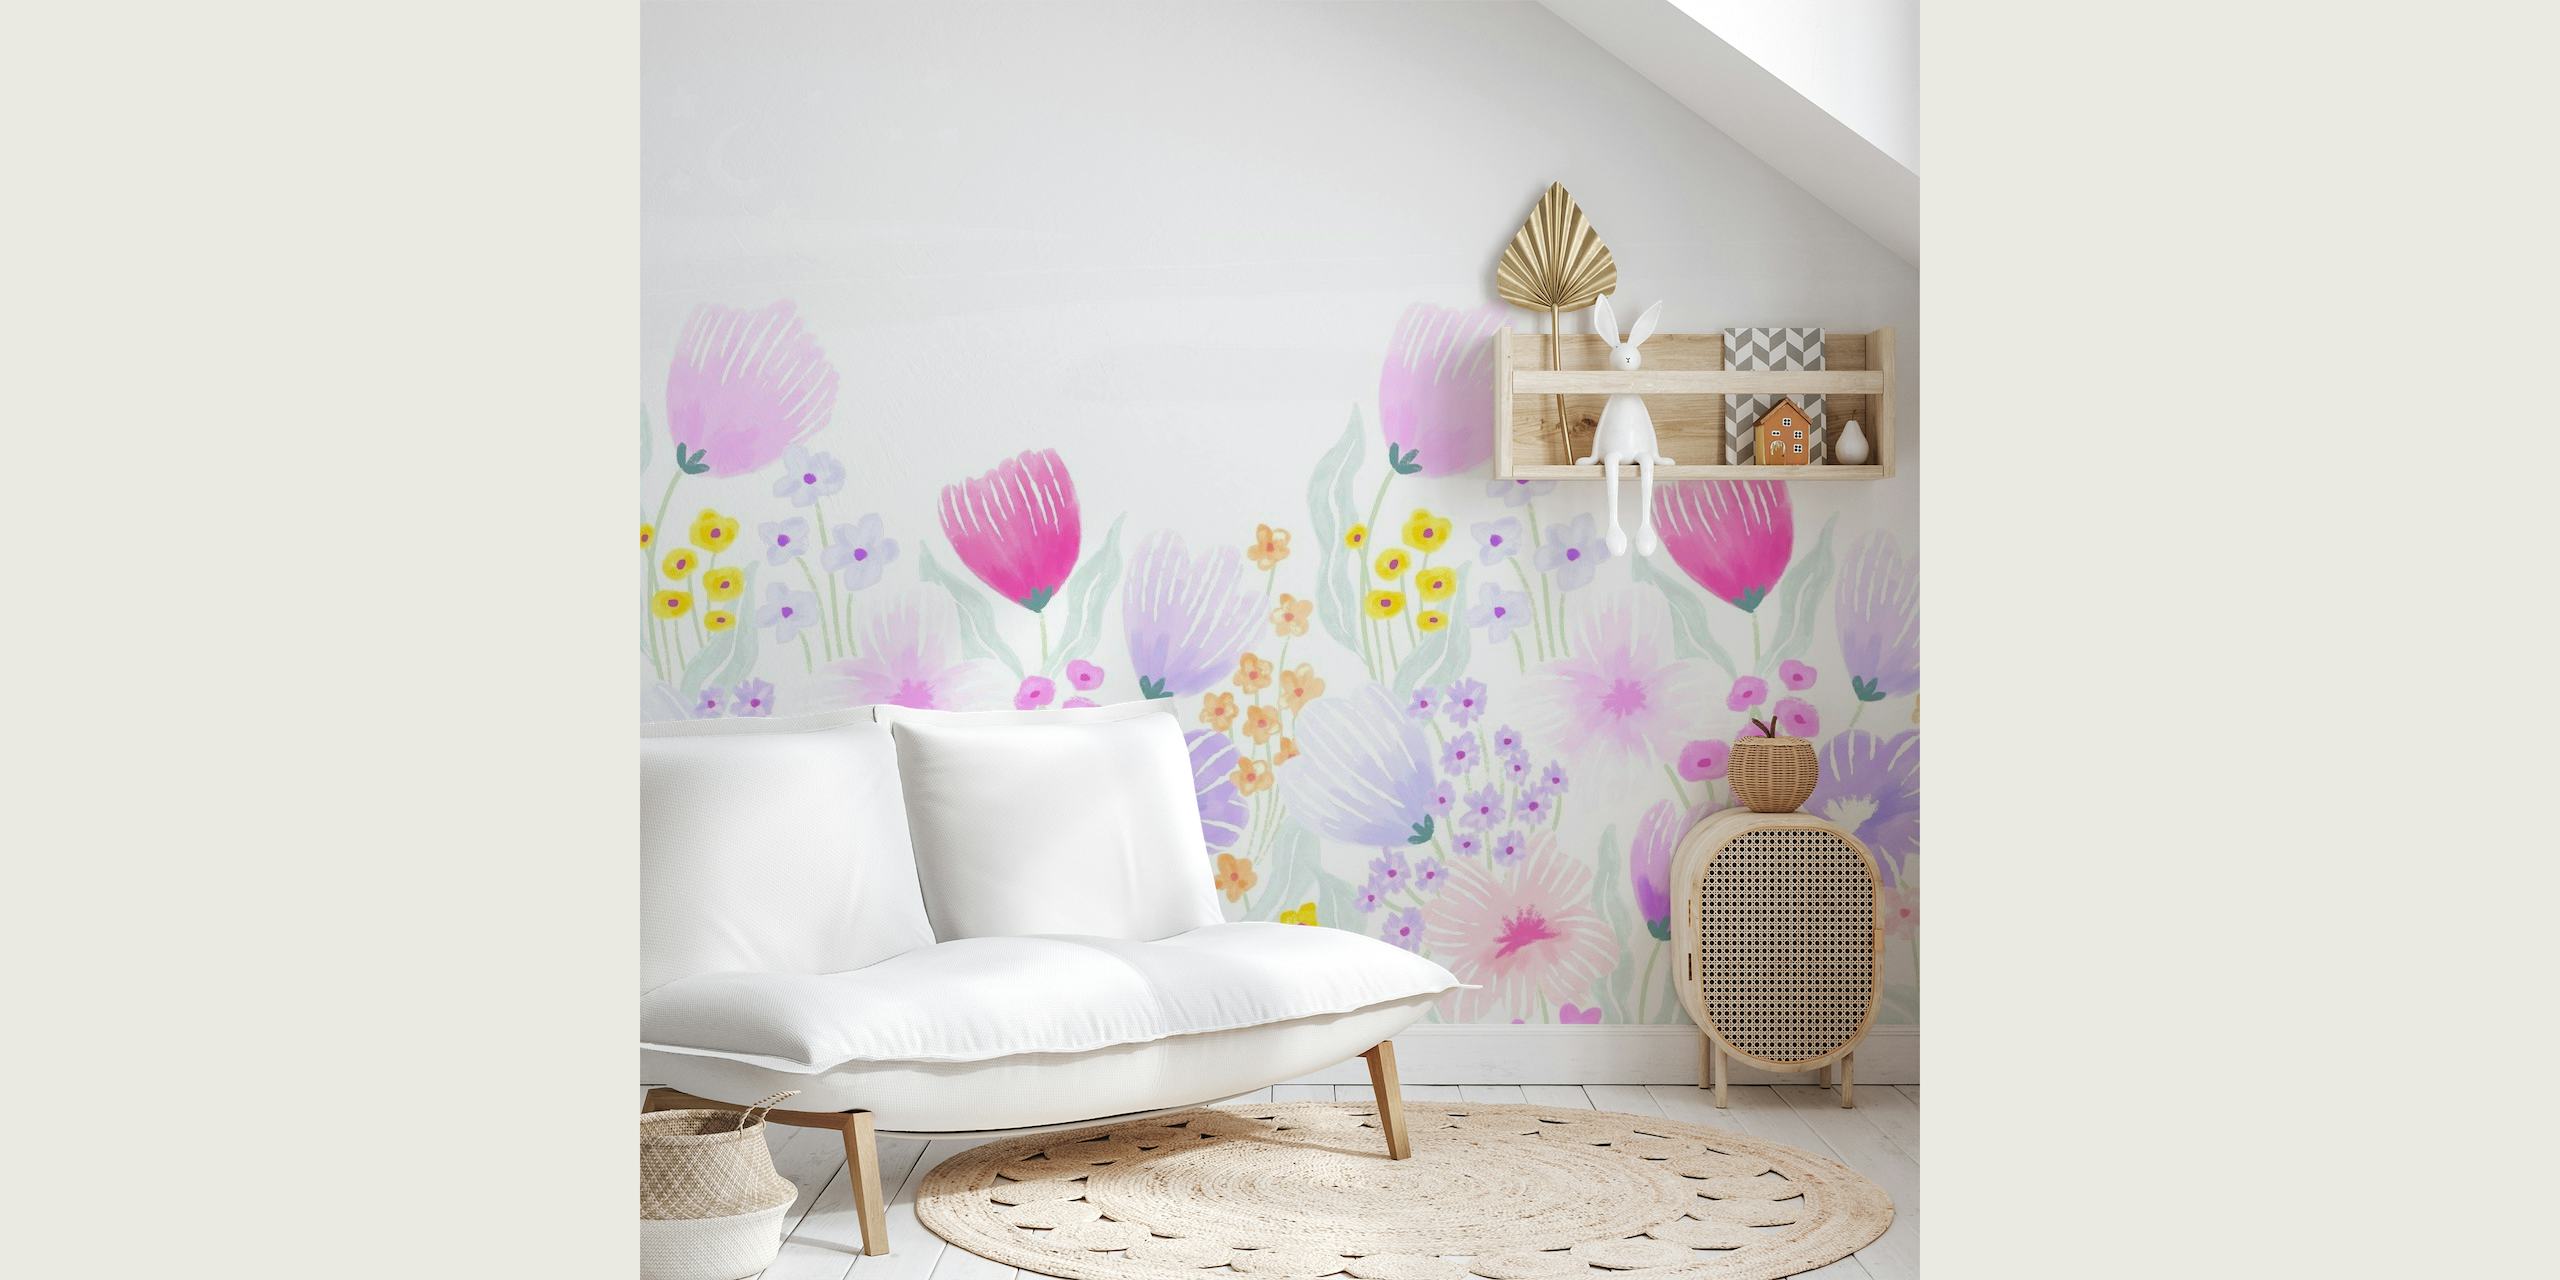 Vibrant Spring Garden wallpaper